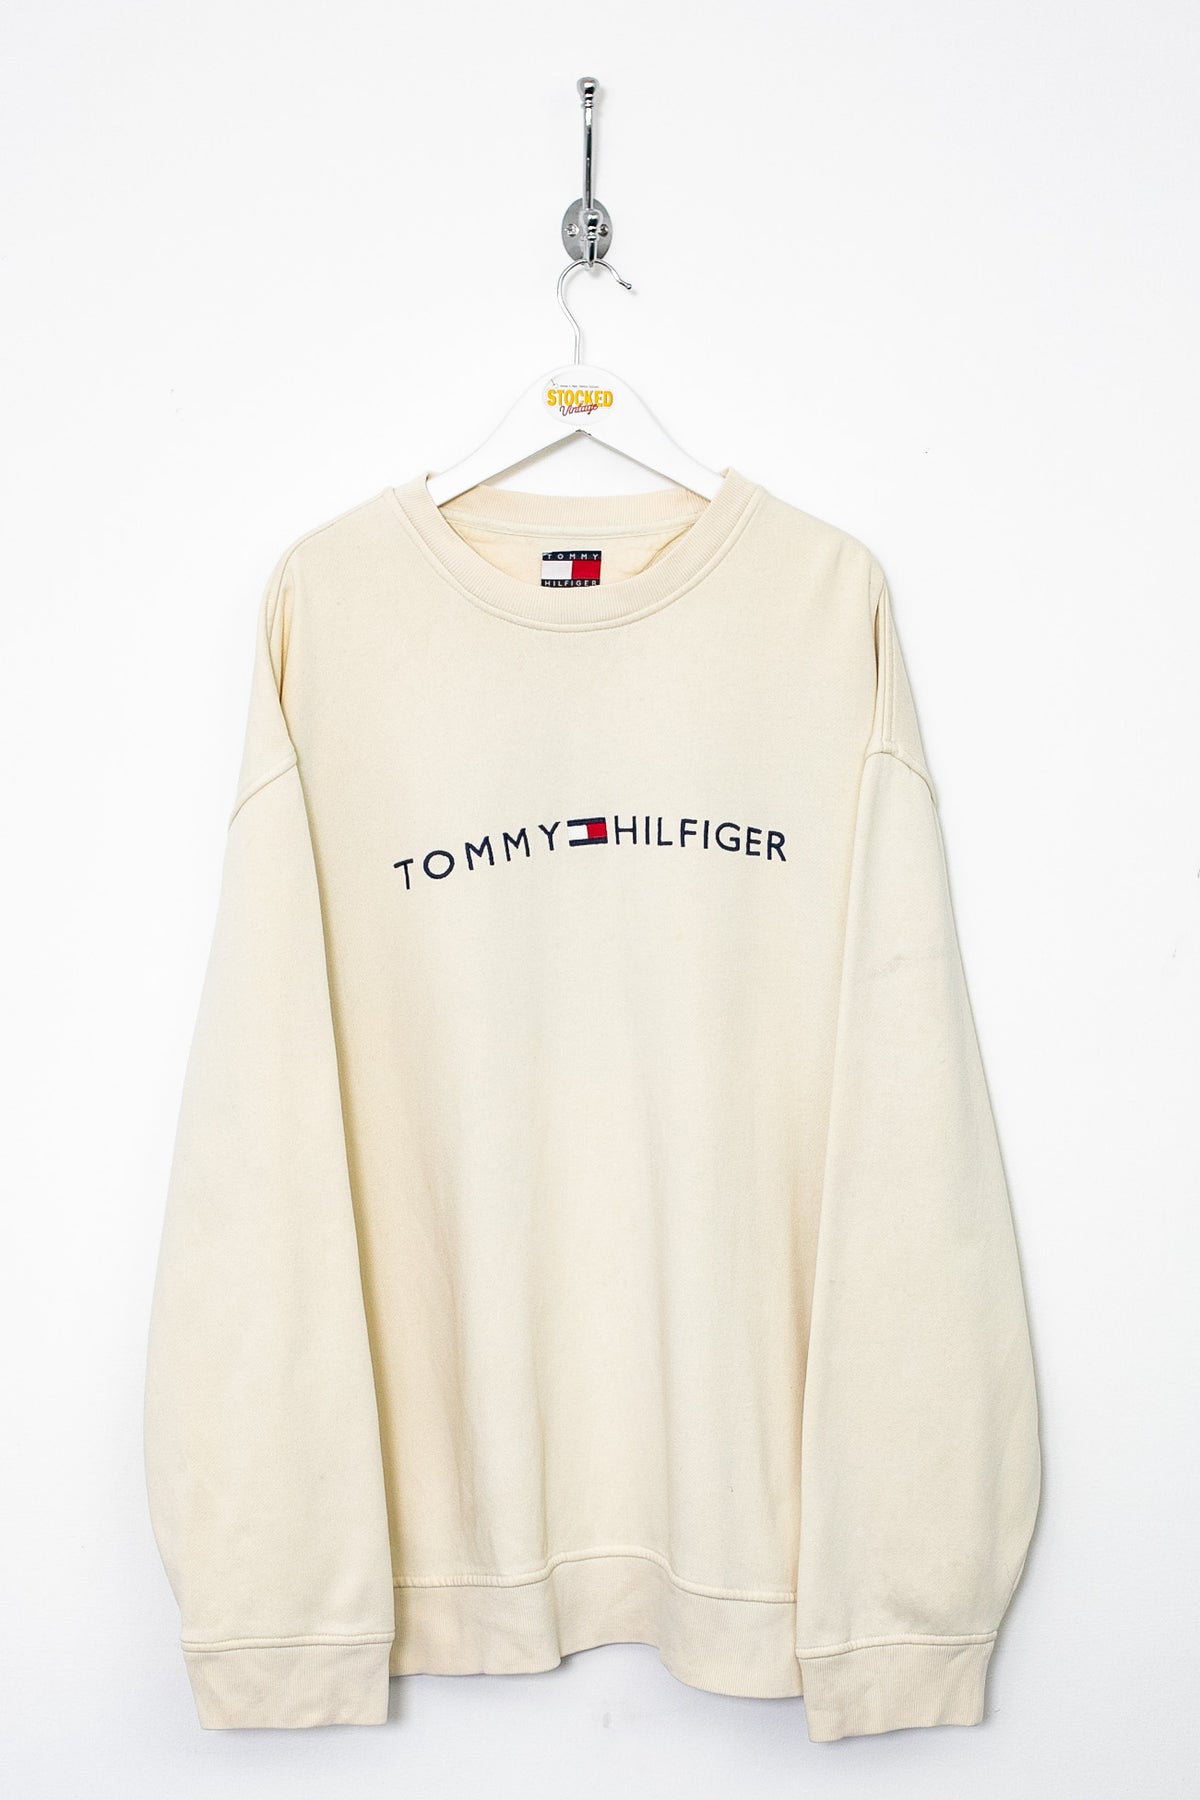 90s Tommy Hilfiger Sweatshirt (XL)